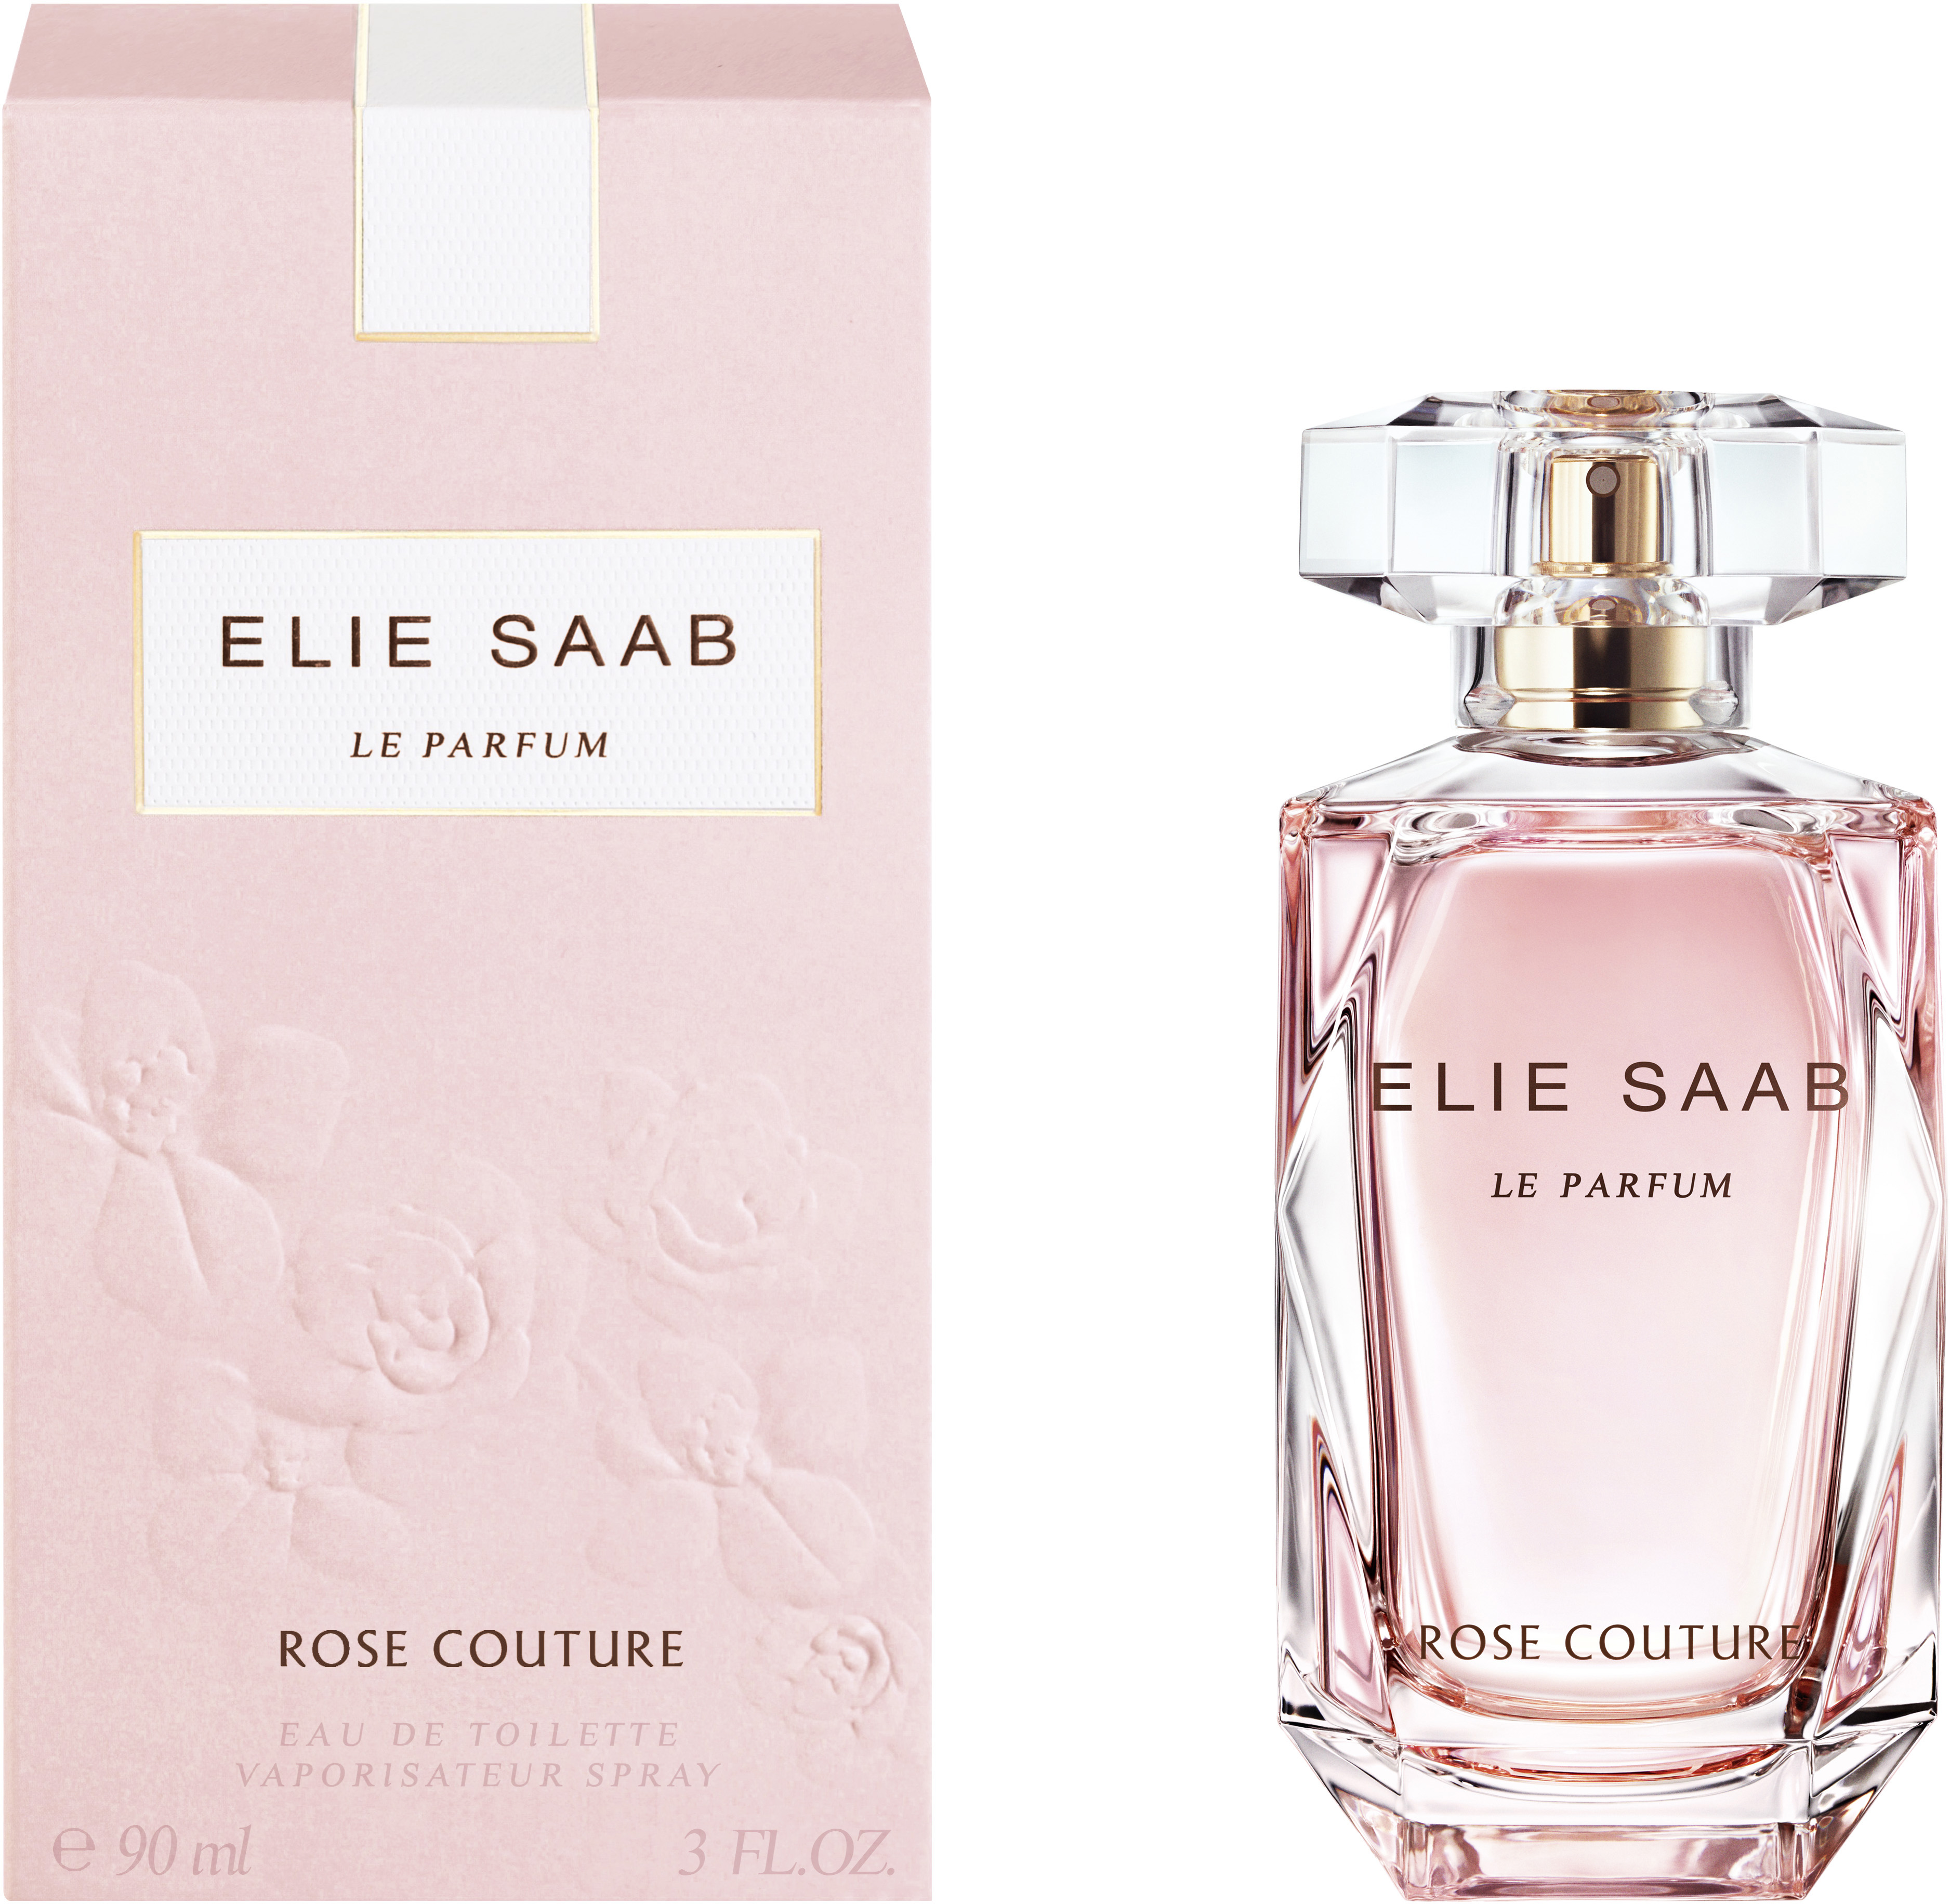 Elie Saab Rose Couture EdT 90ml